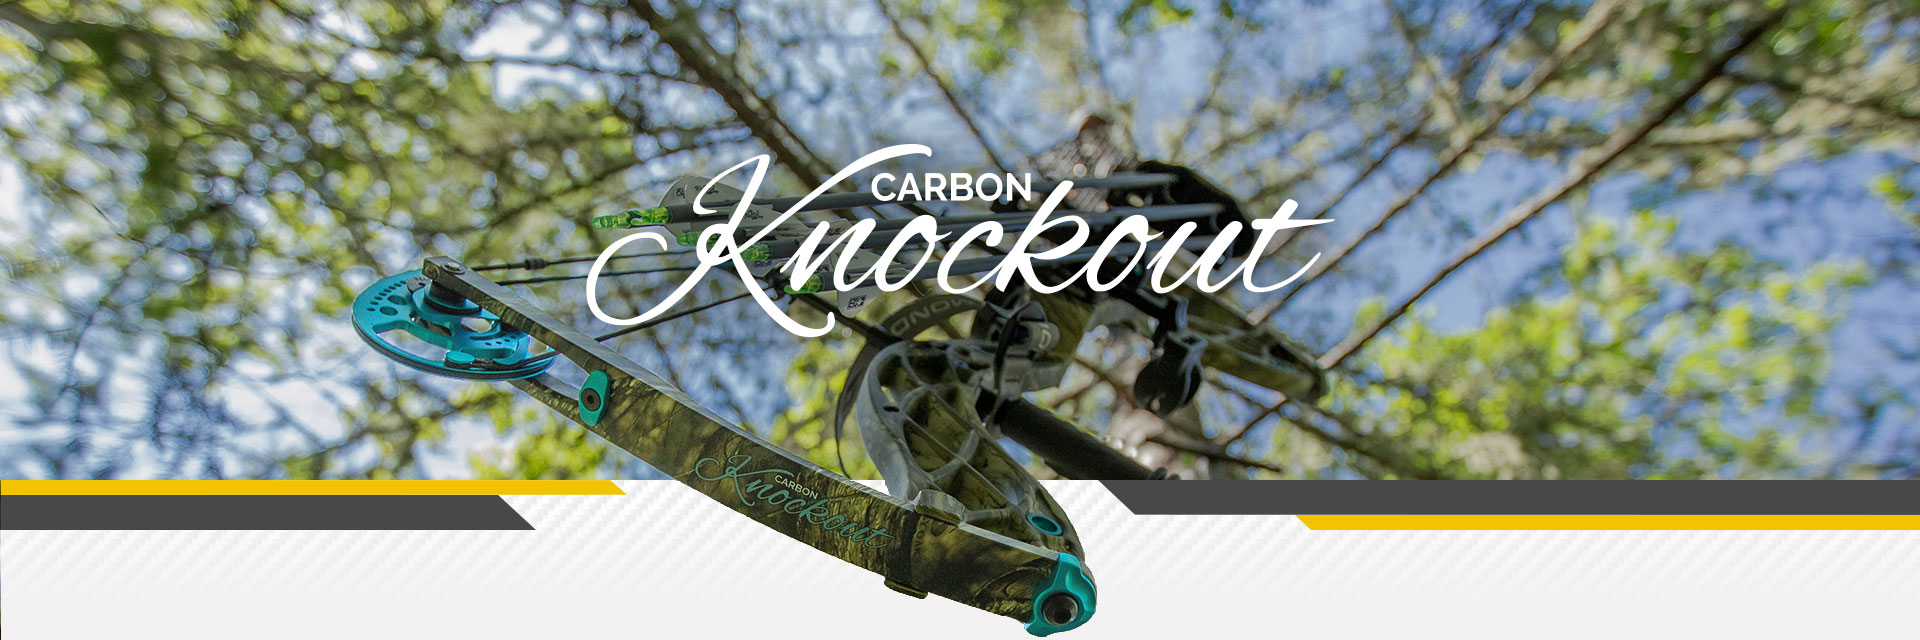 carbon knockout lifestyle header image